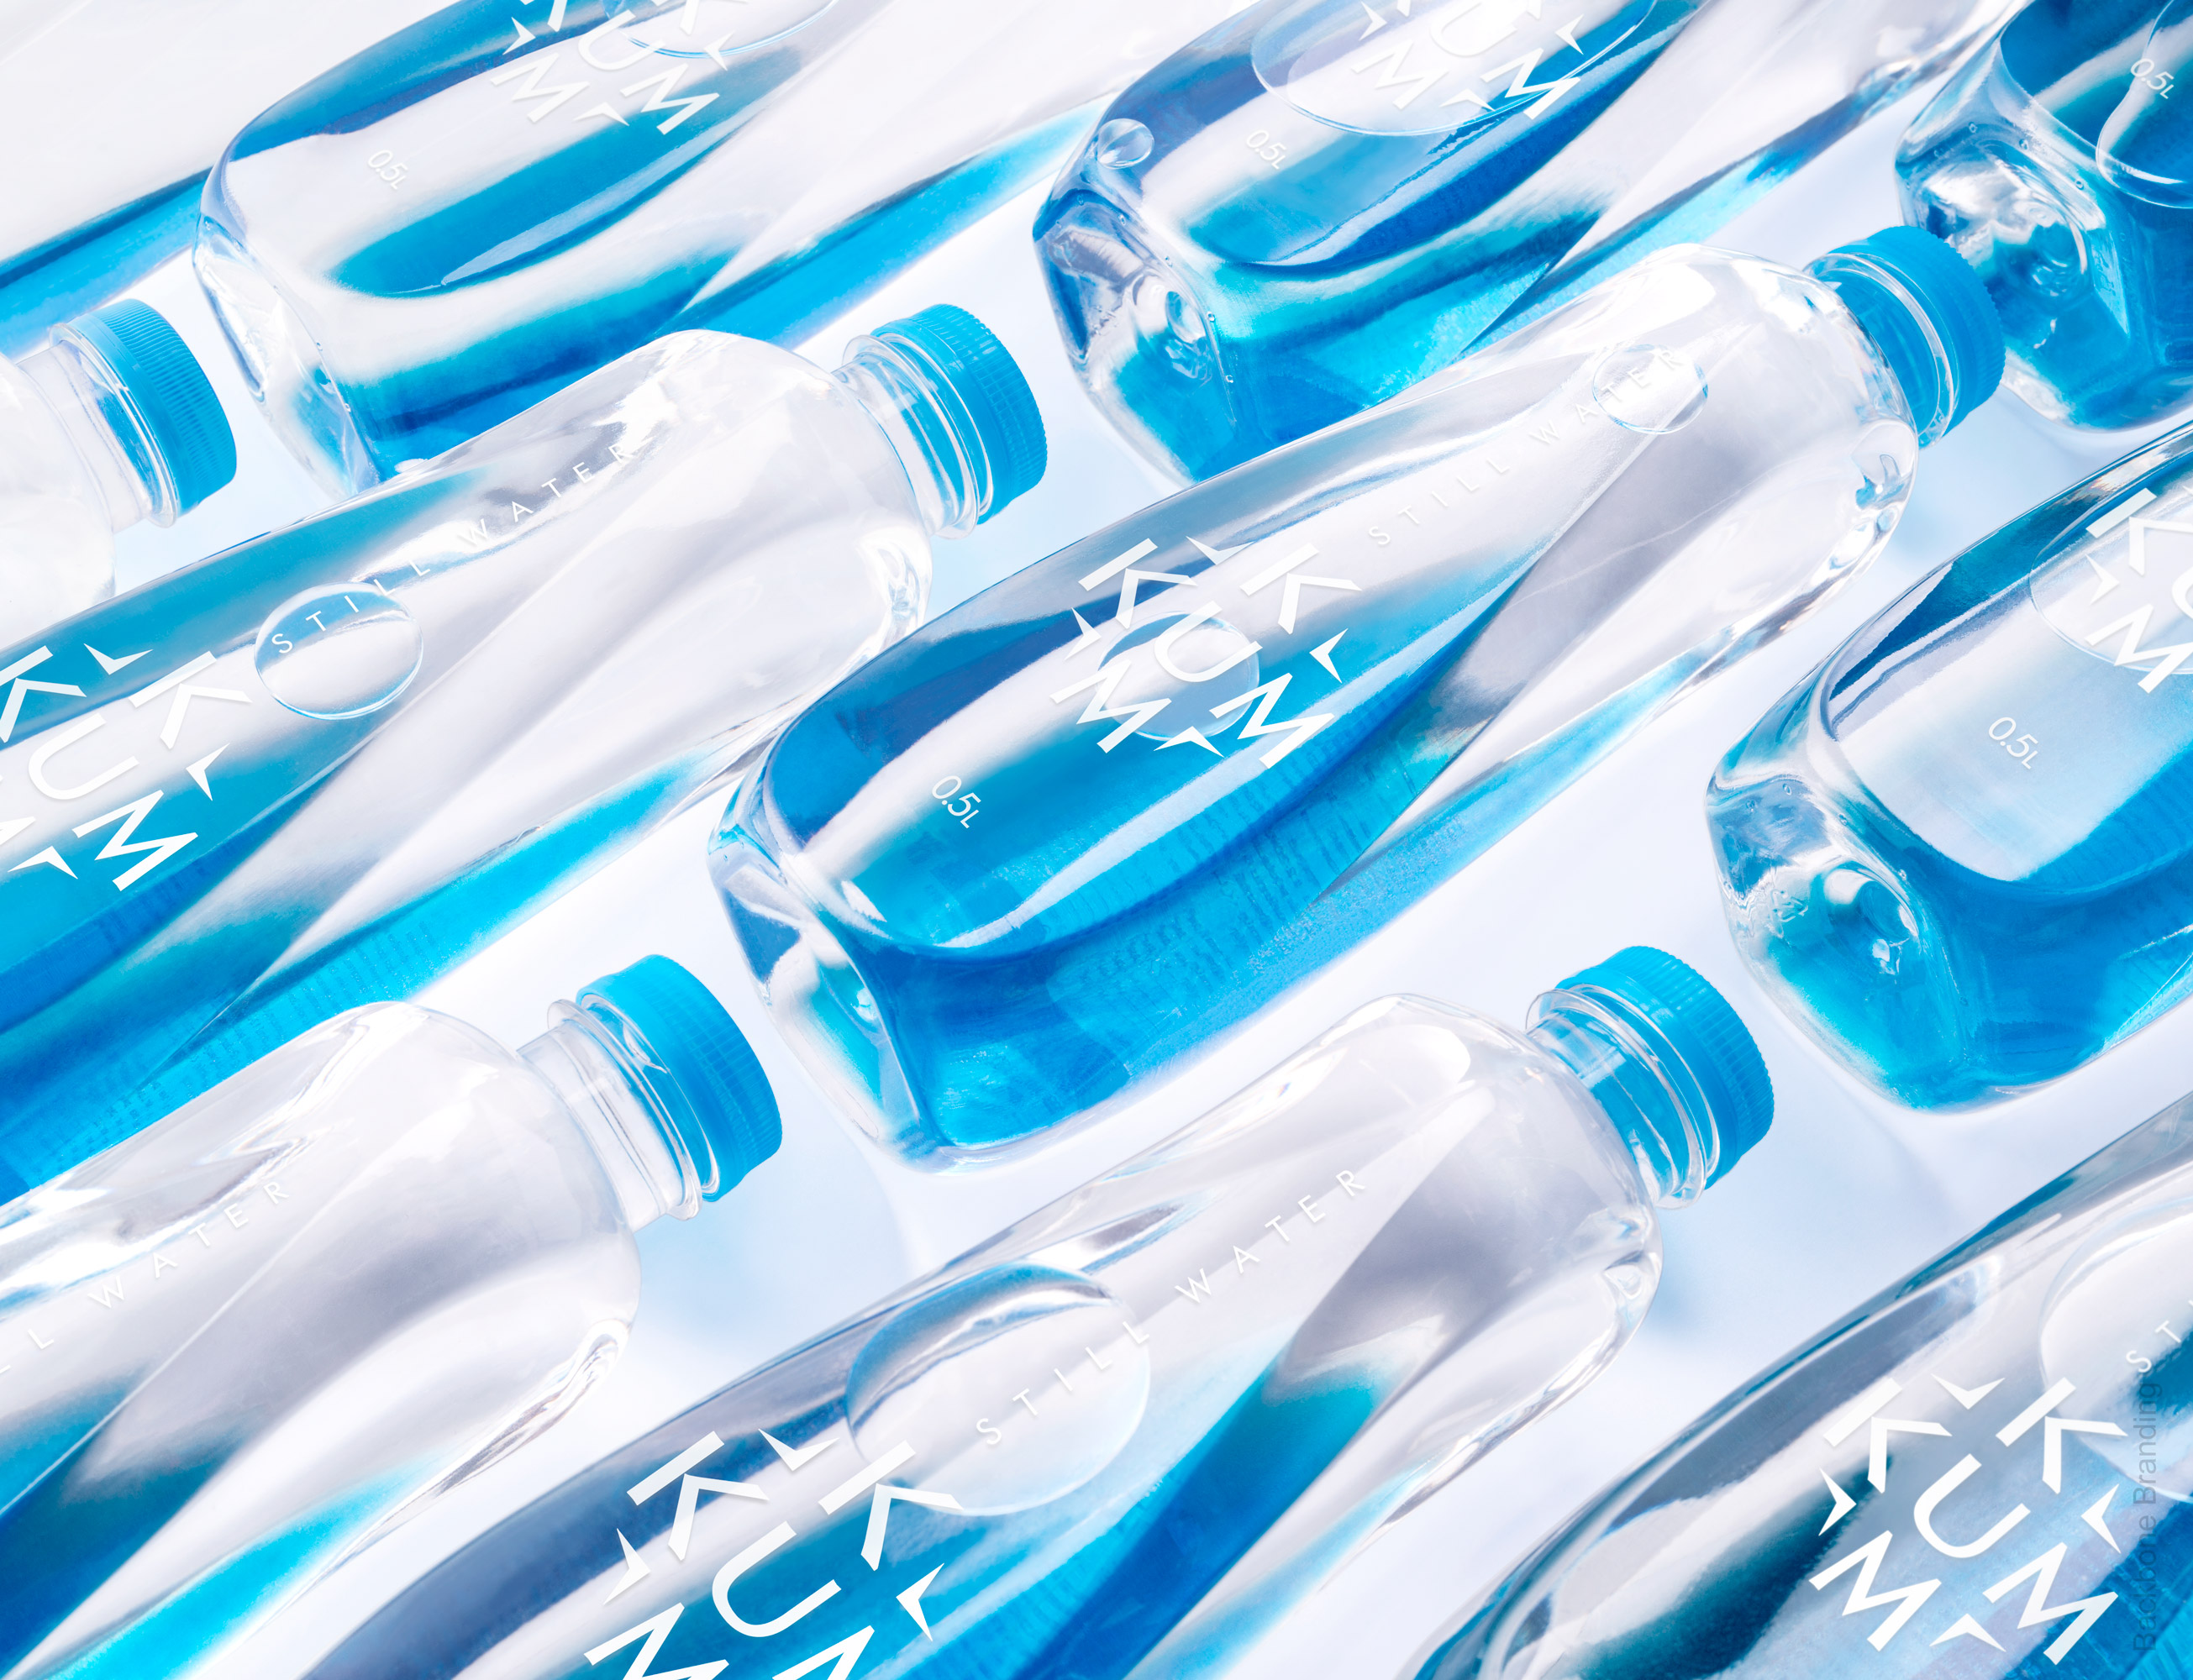 Backbone Branding Creates KUM-KUM: a Very Unique Water Bottle Design